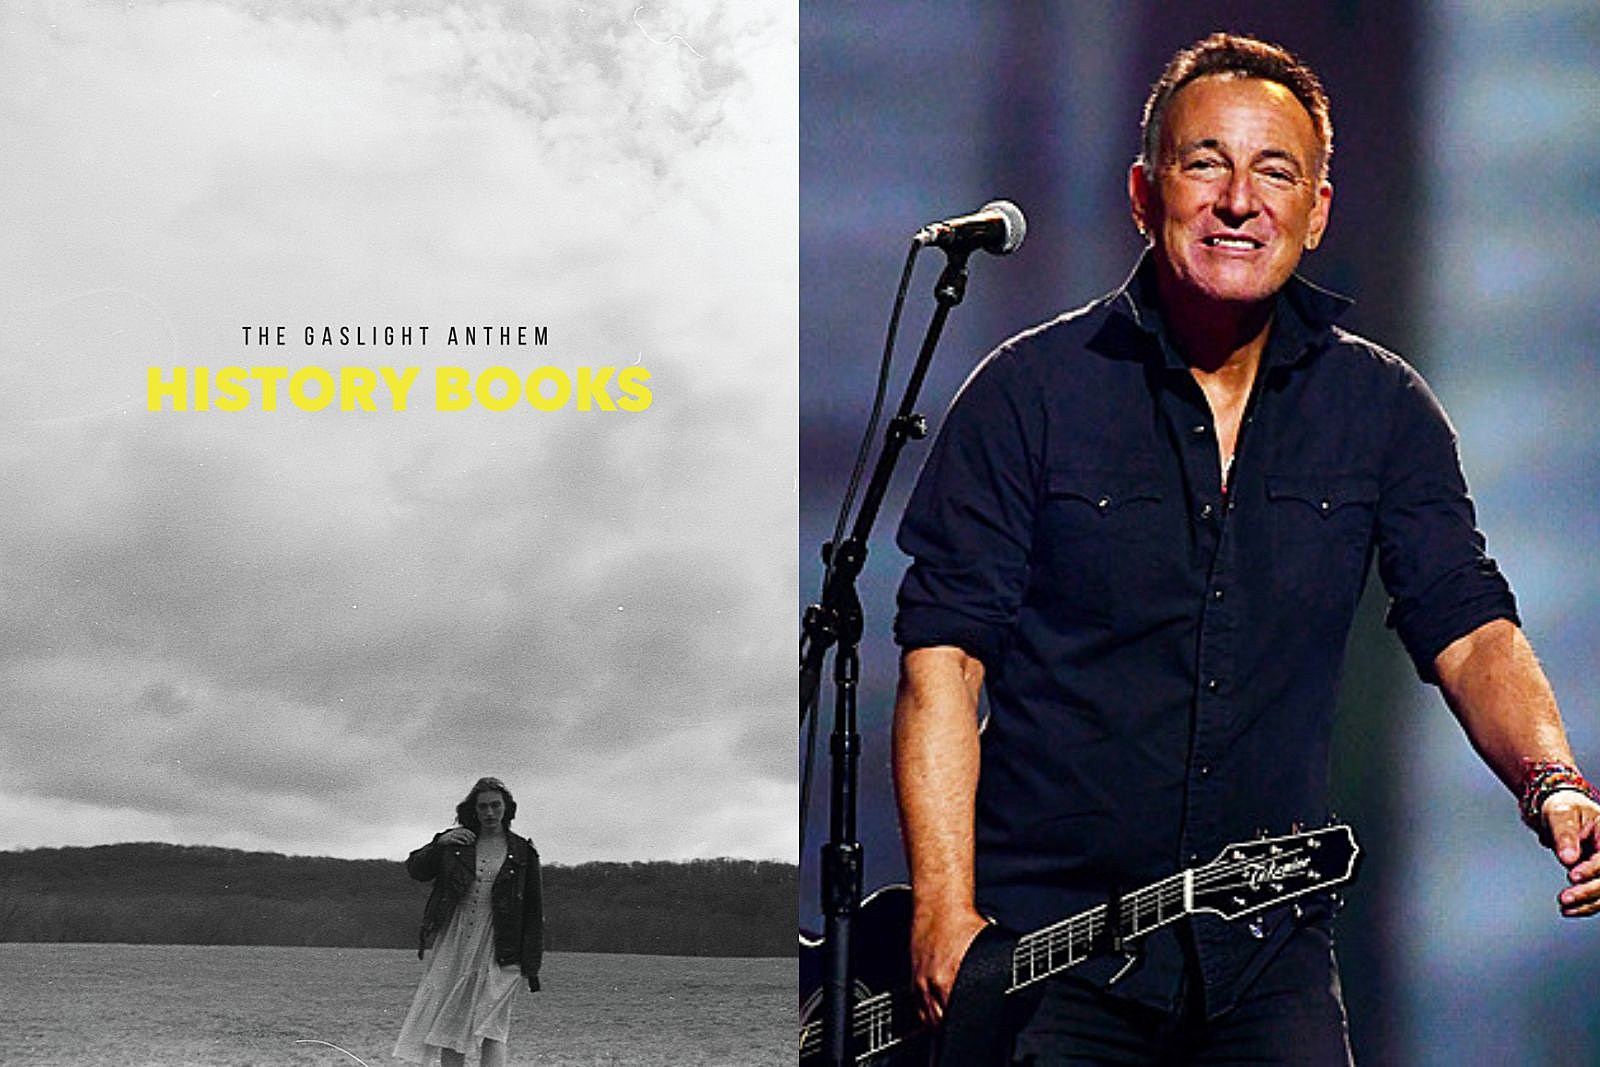 Hear Bruce Springsteen on the Gaslight Anthem’s ‘History Books’